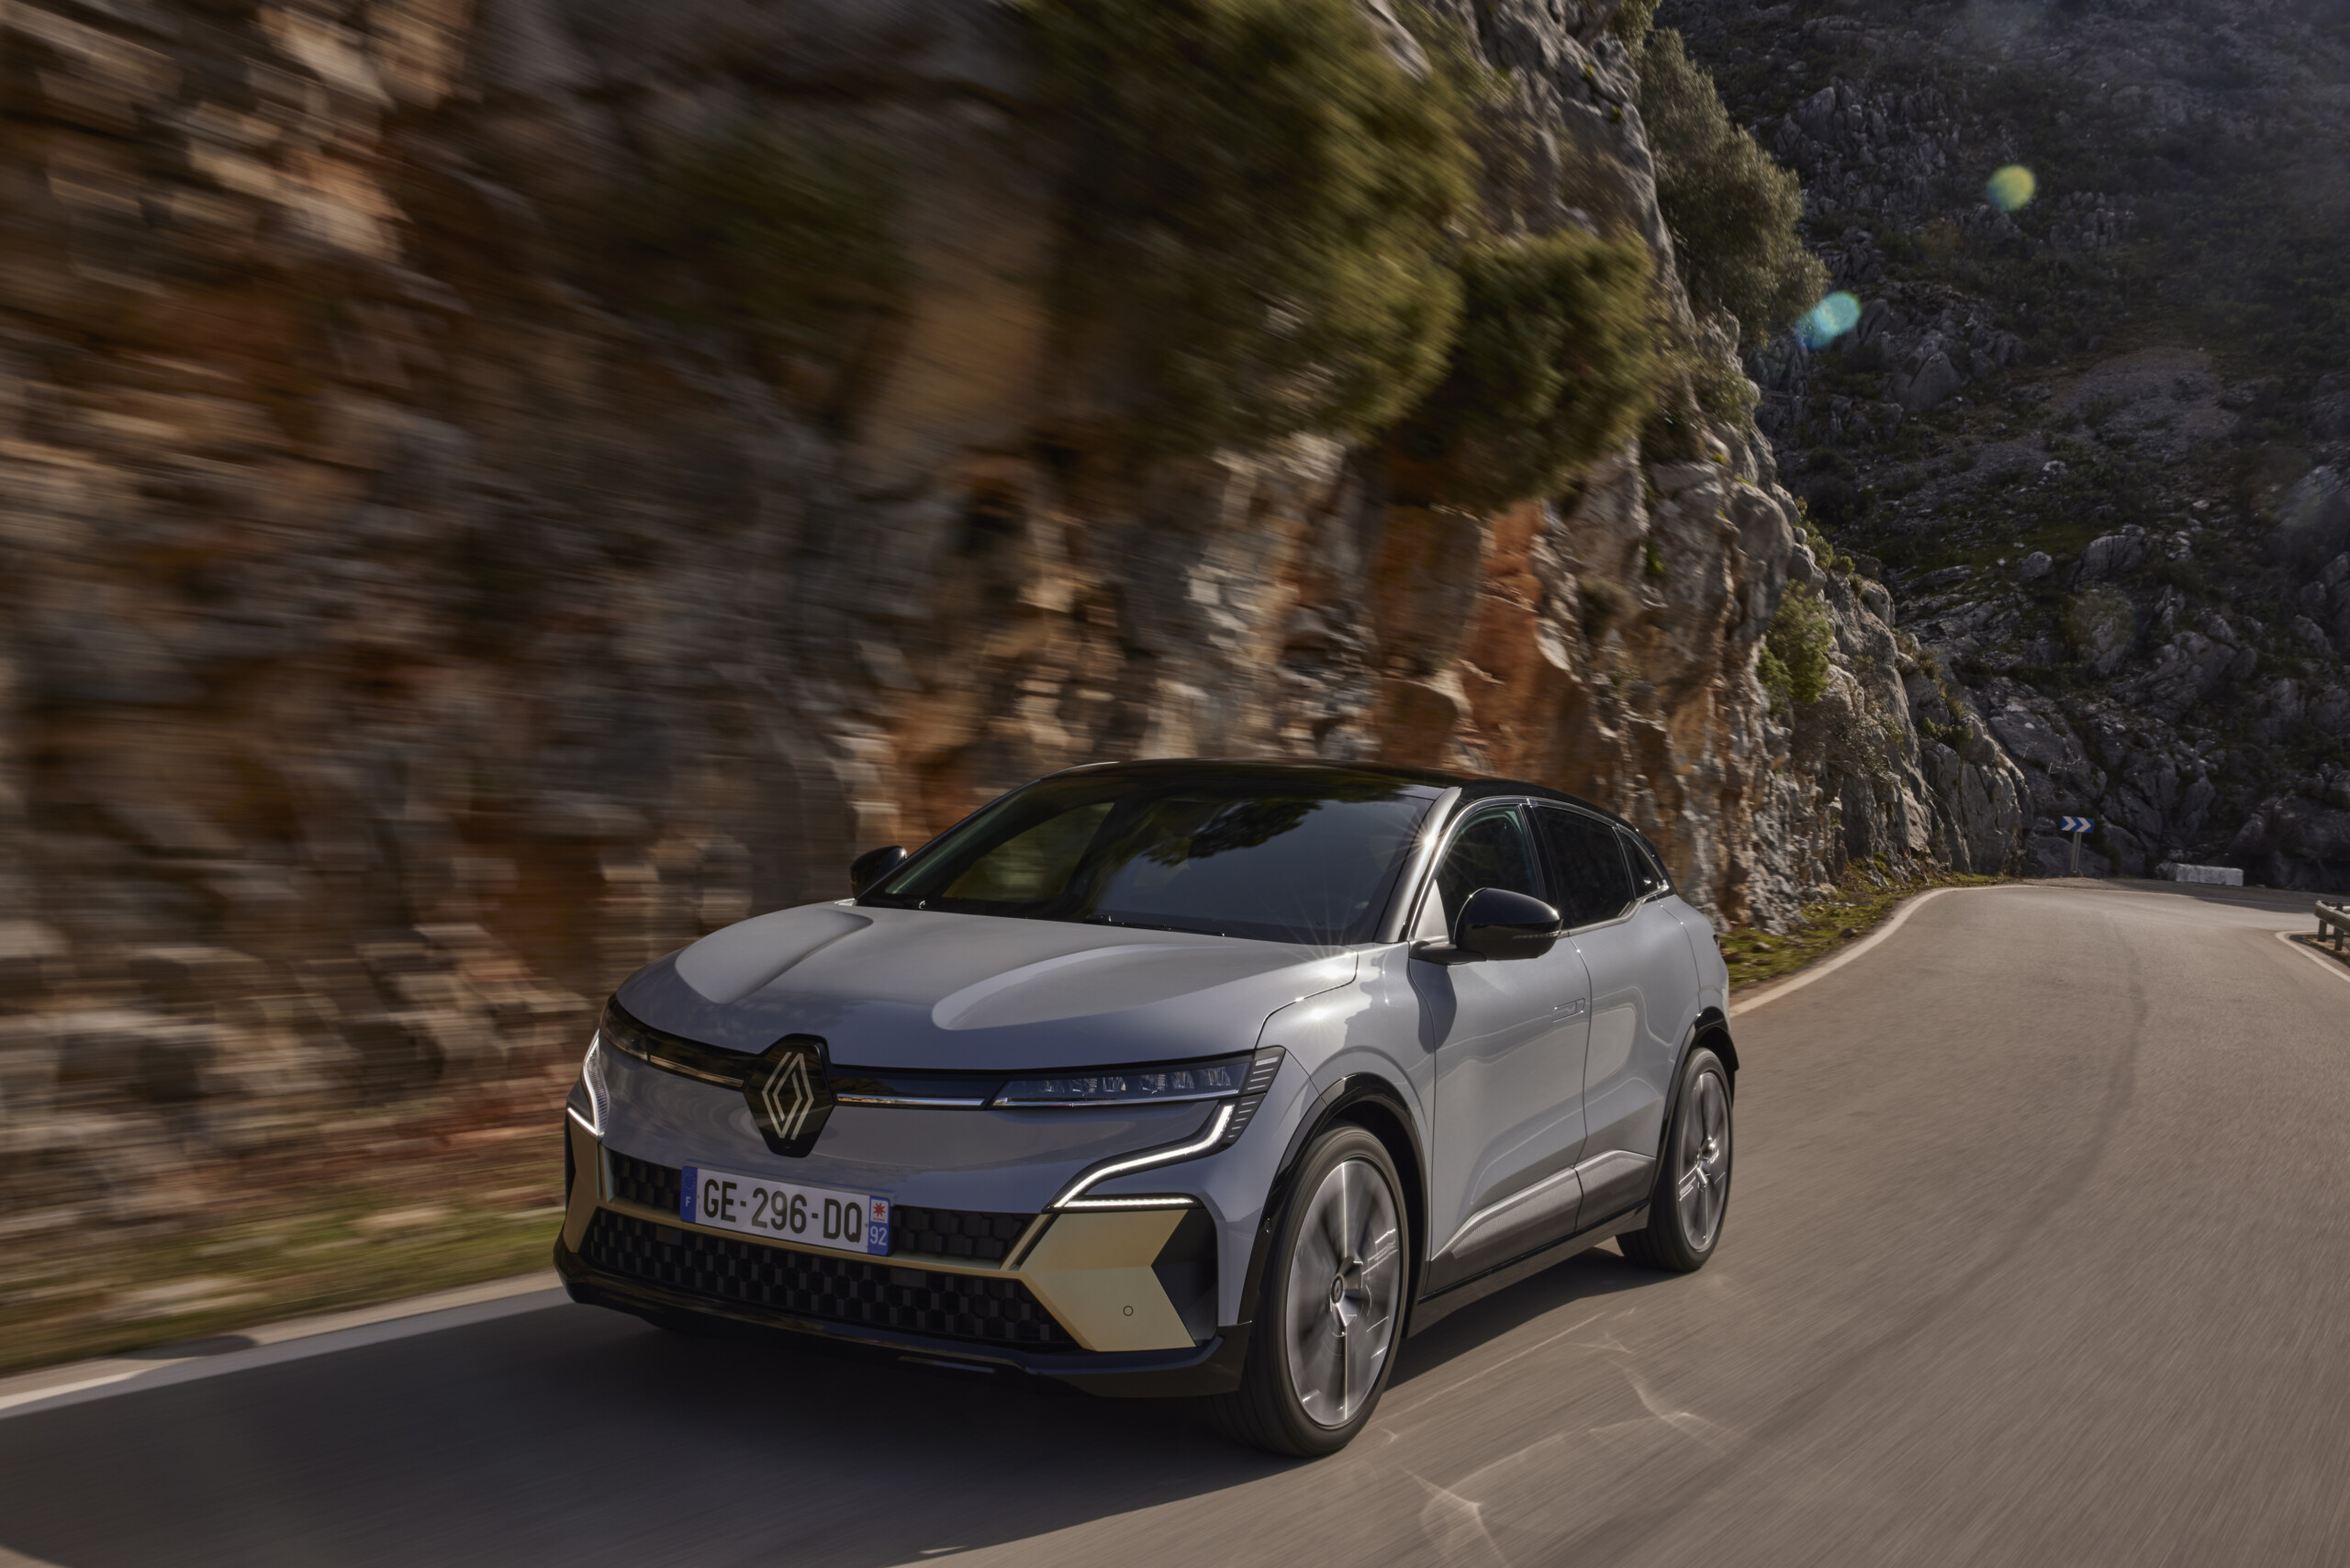 Renault Megane 4 : essais, fiabilité, avis, photos, prix